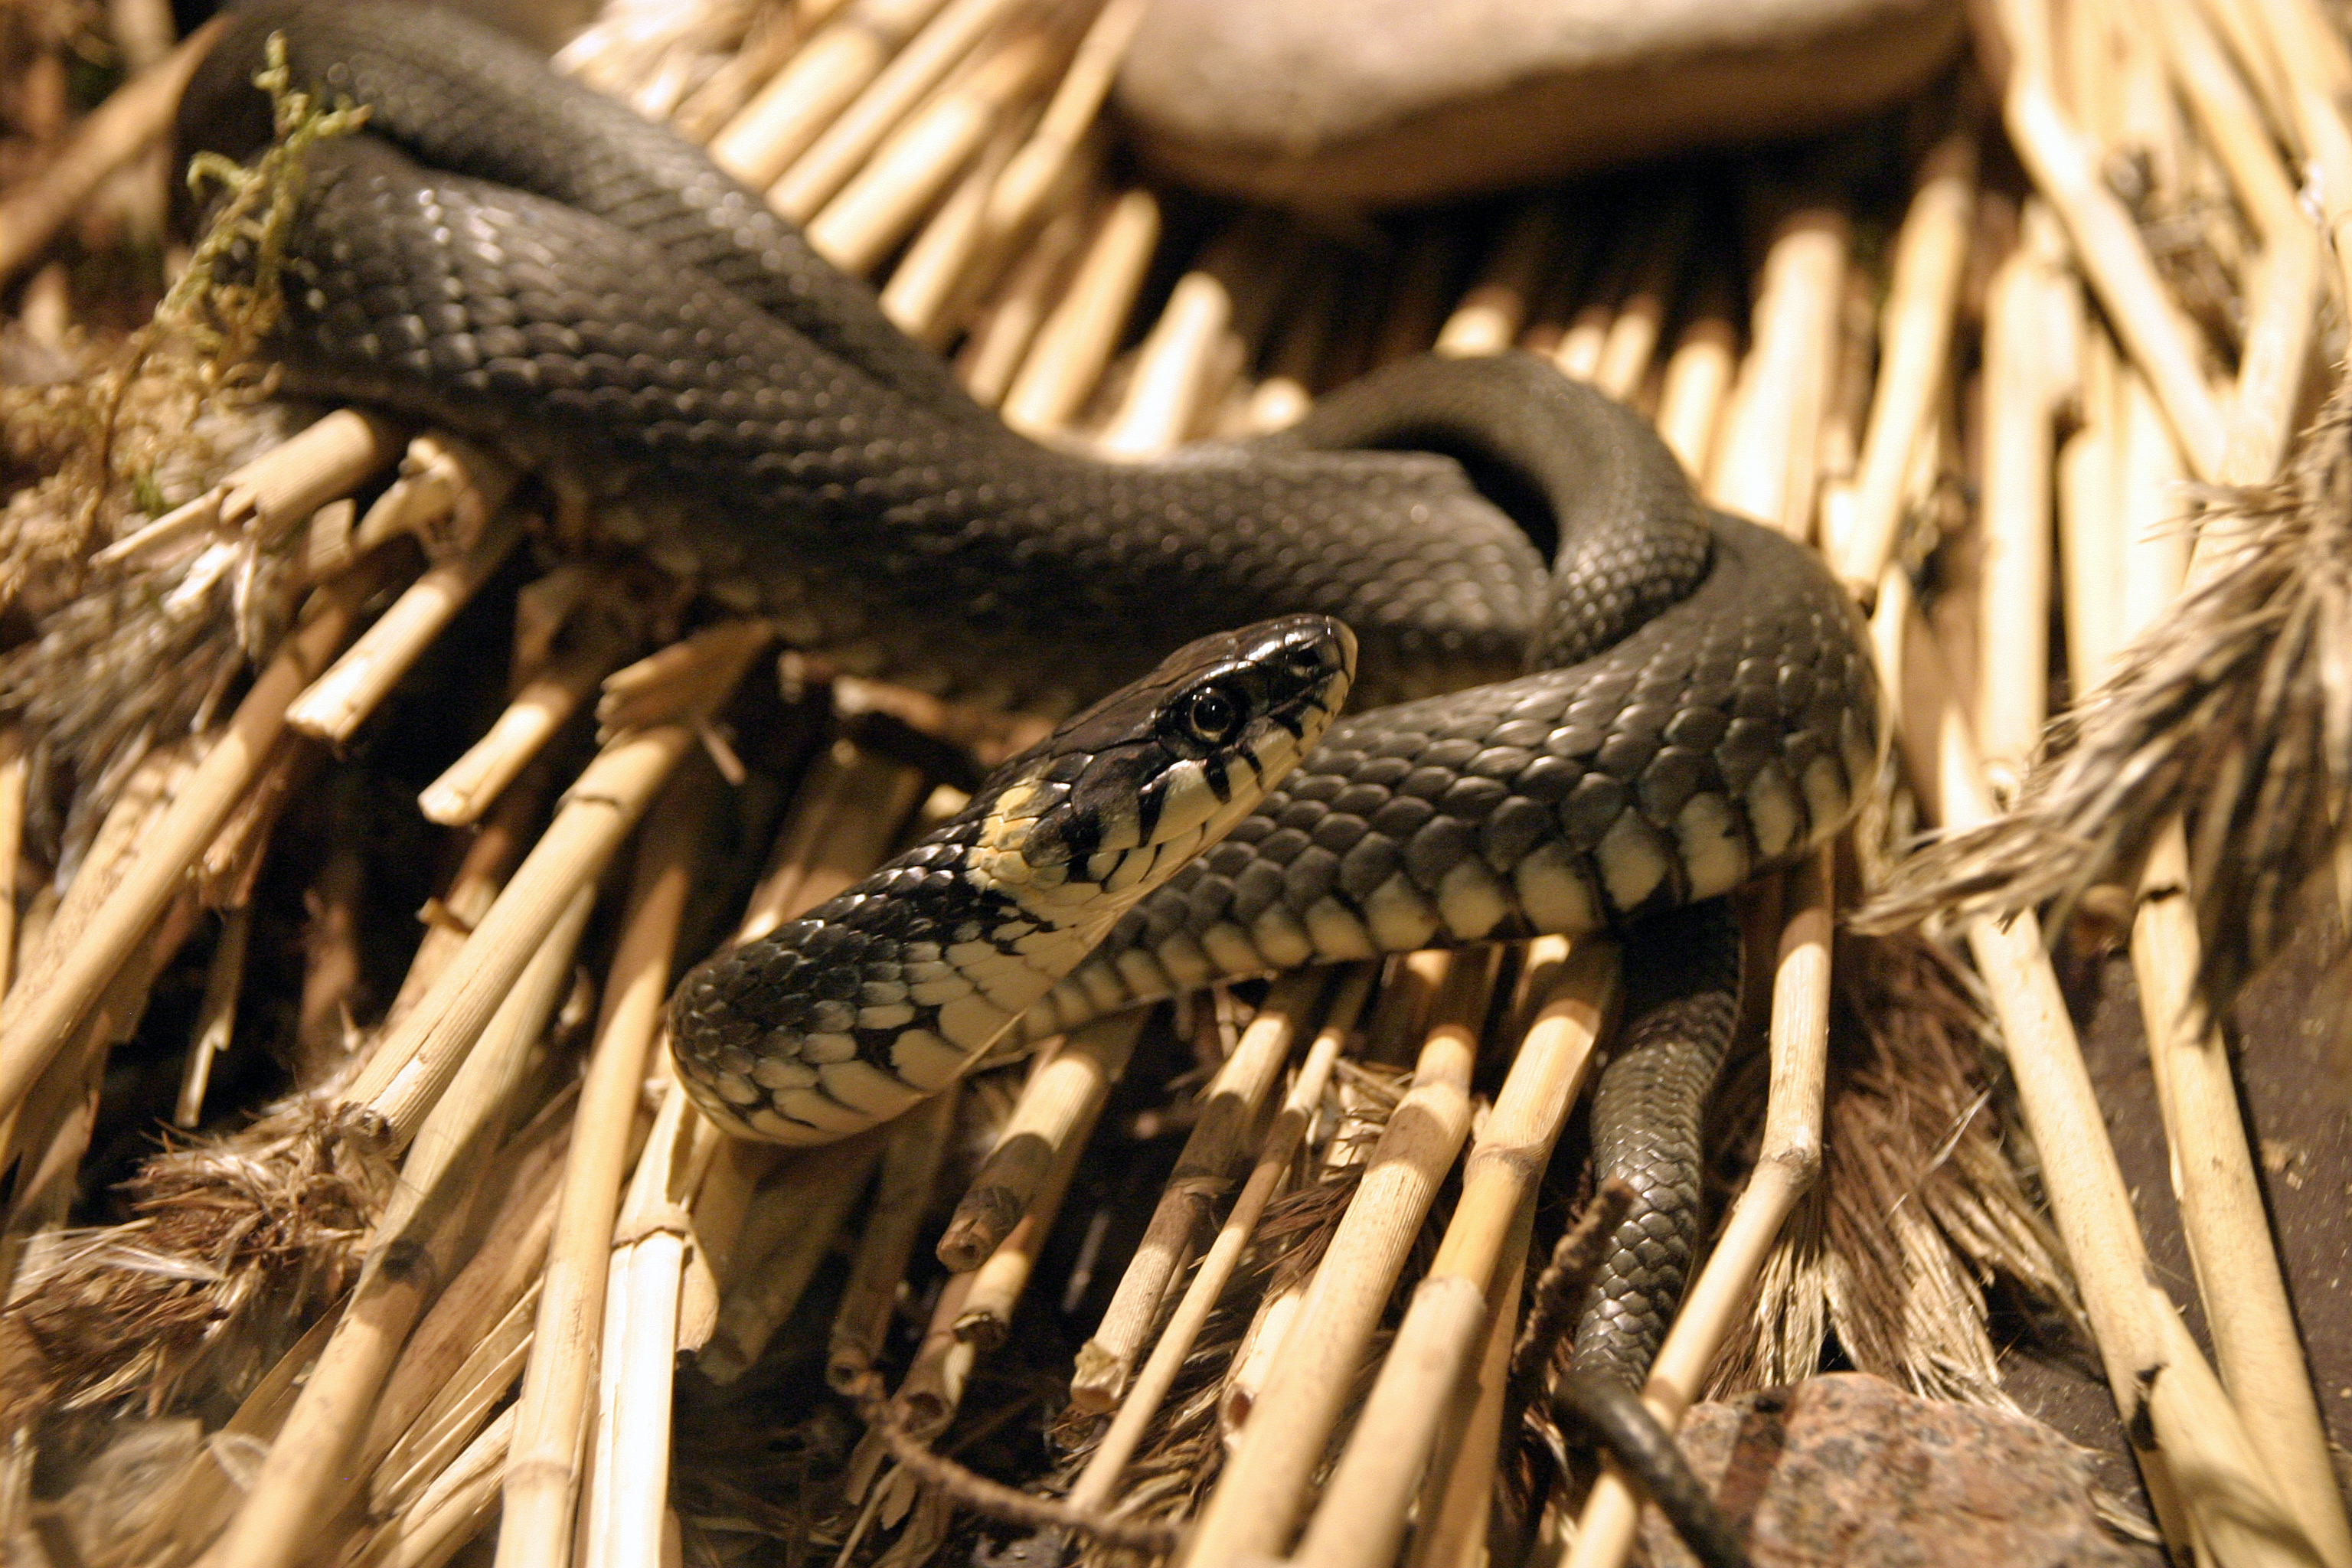 European grass snake | Maretarium